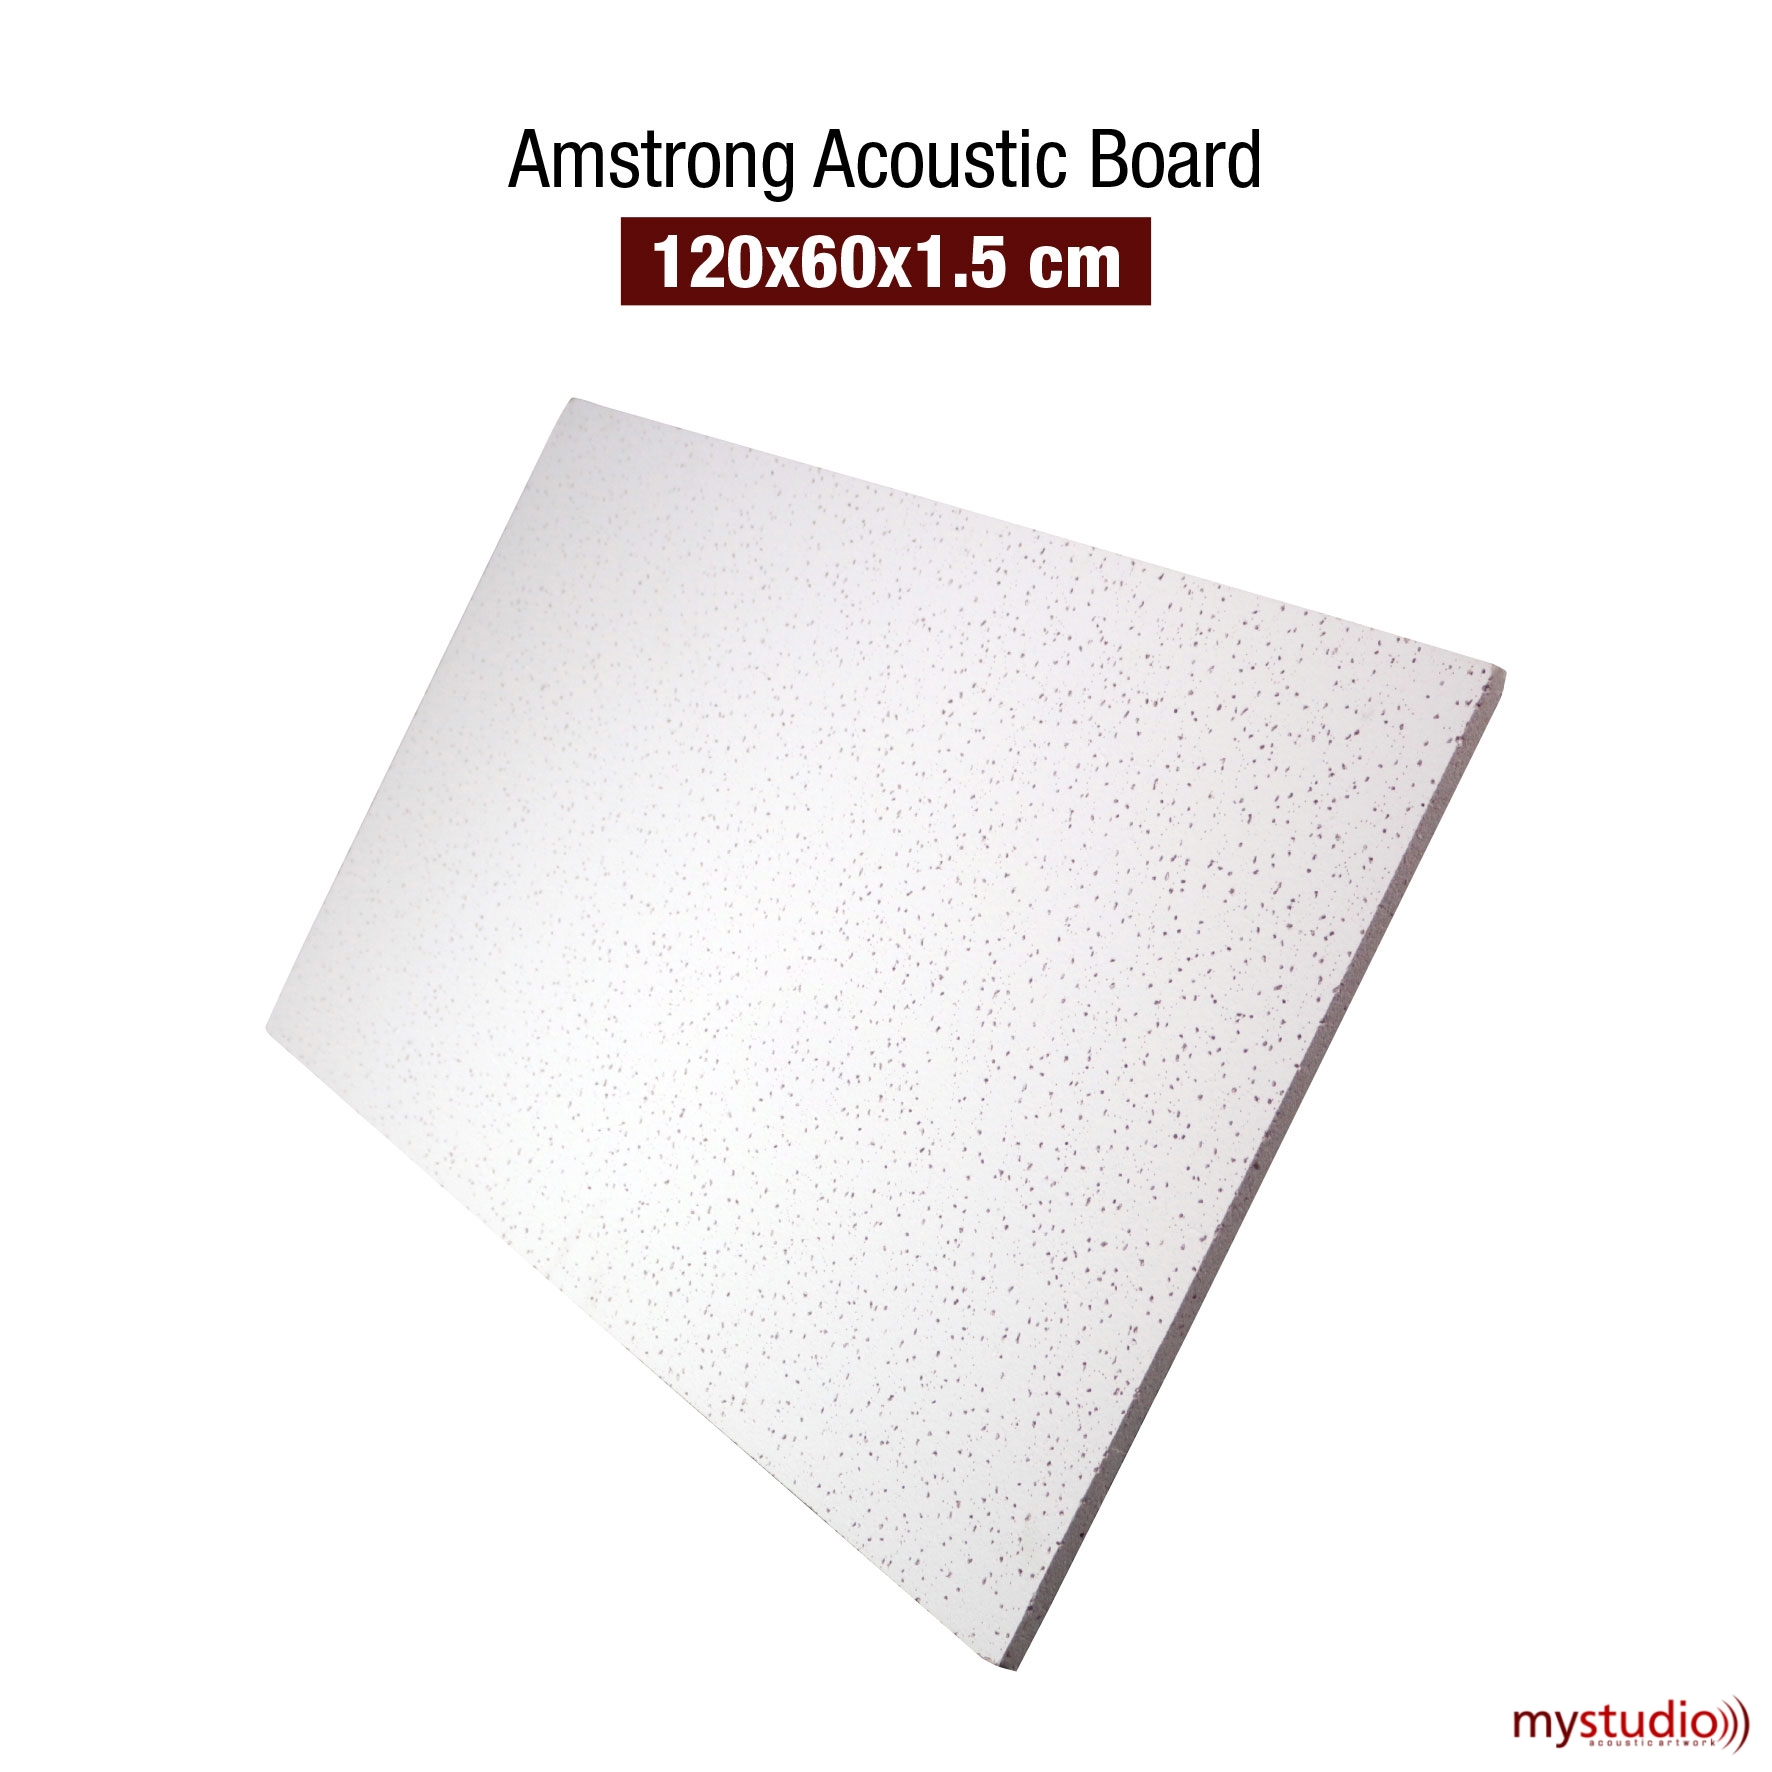 Amstrong Acoustic Board - Produk Mystudio